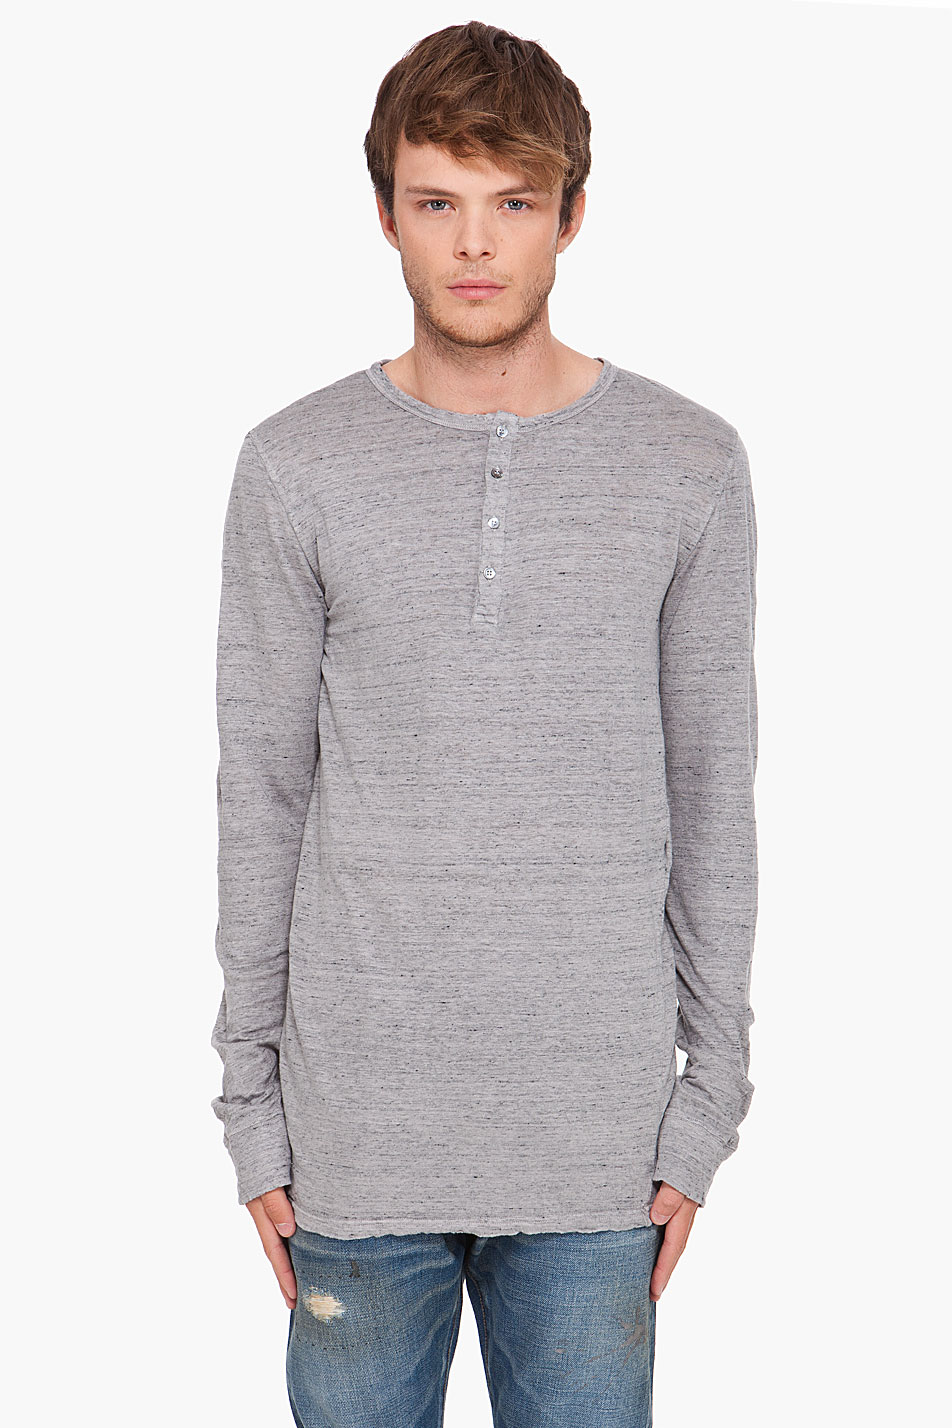 Balmain Henley Jersey T-shirt in Grey (Gray) for Men - Lyst